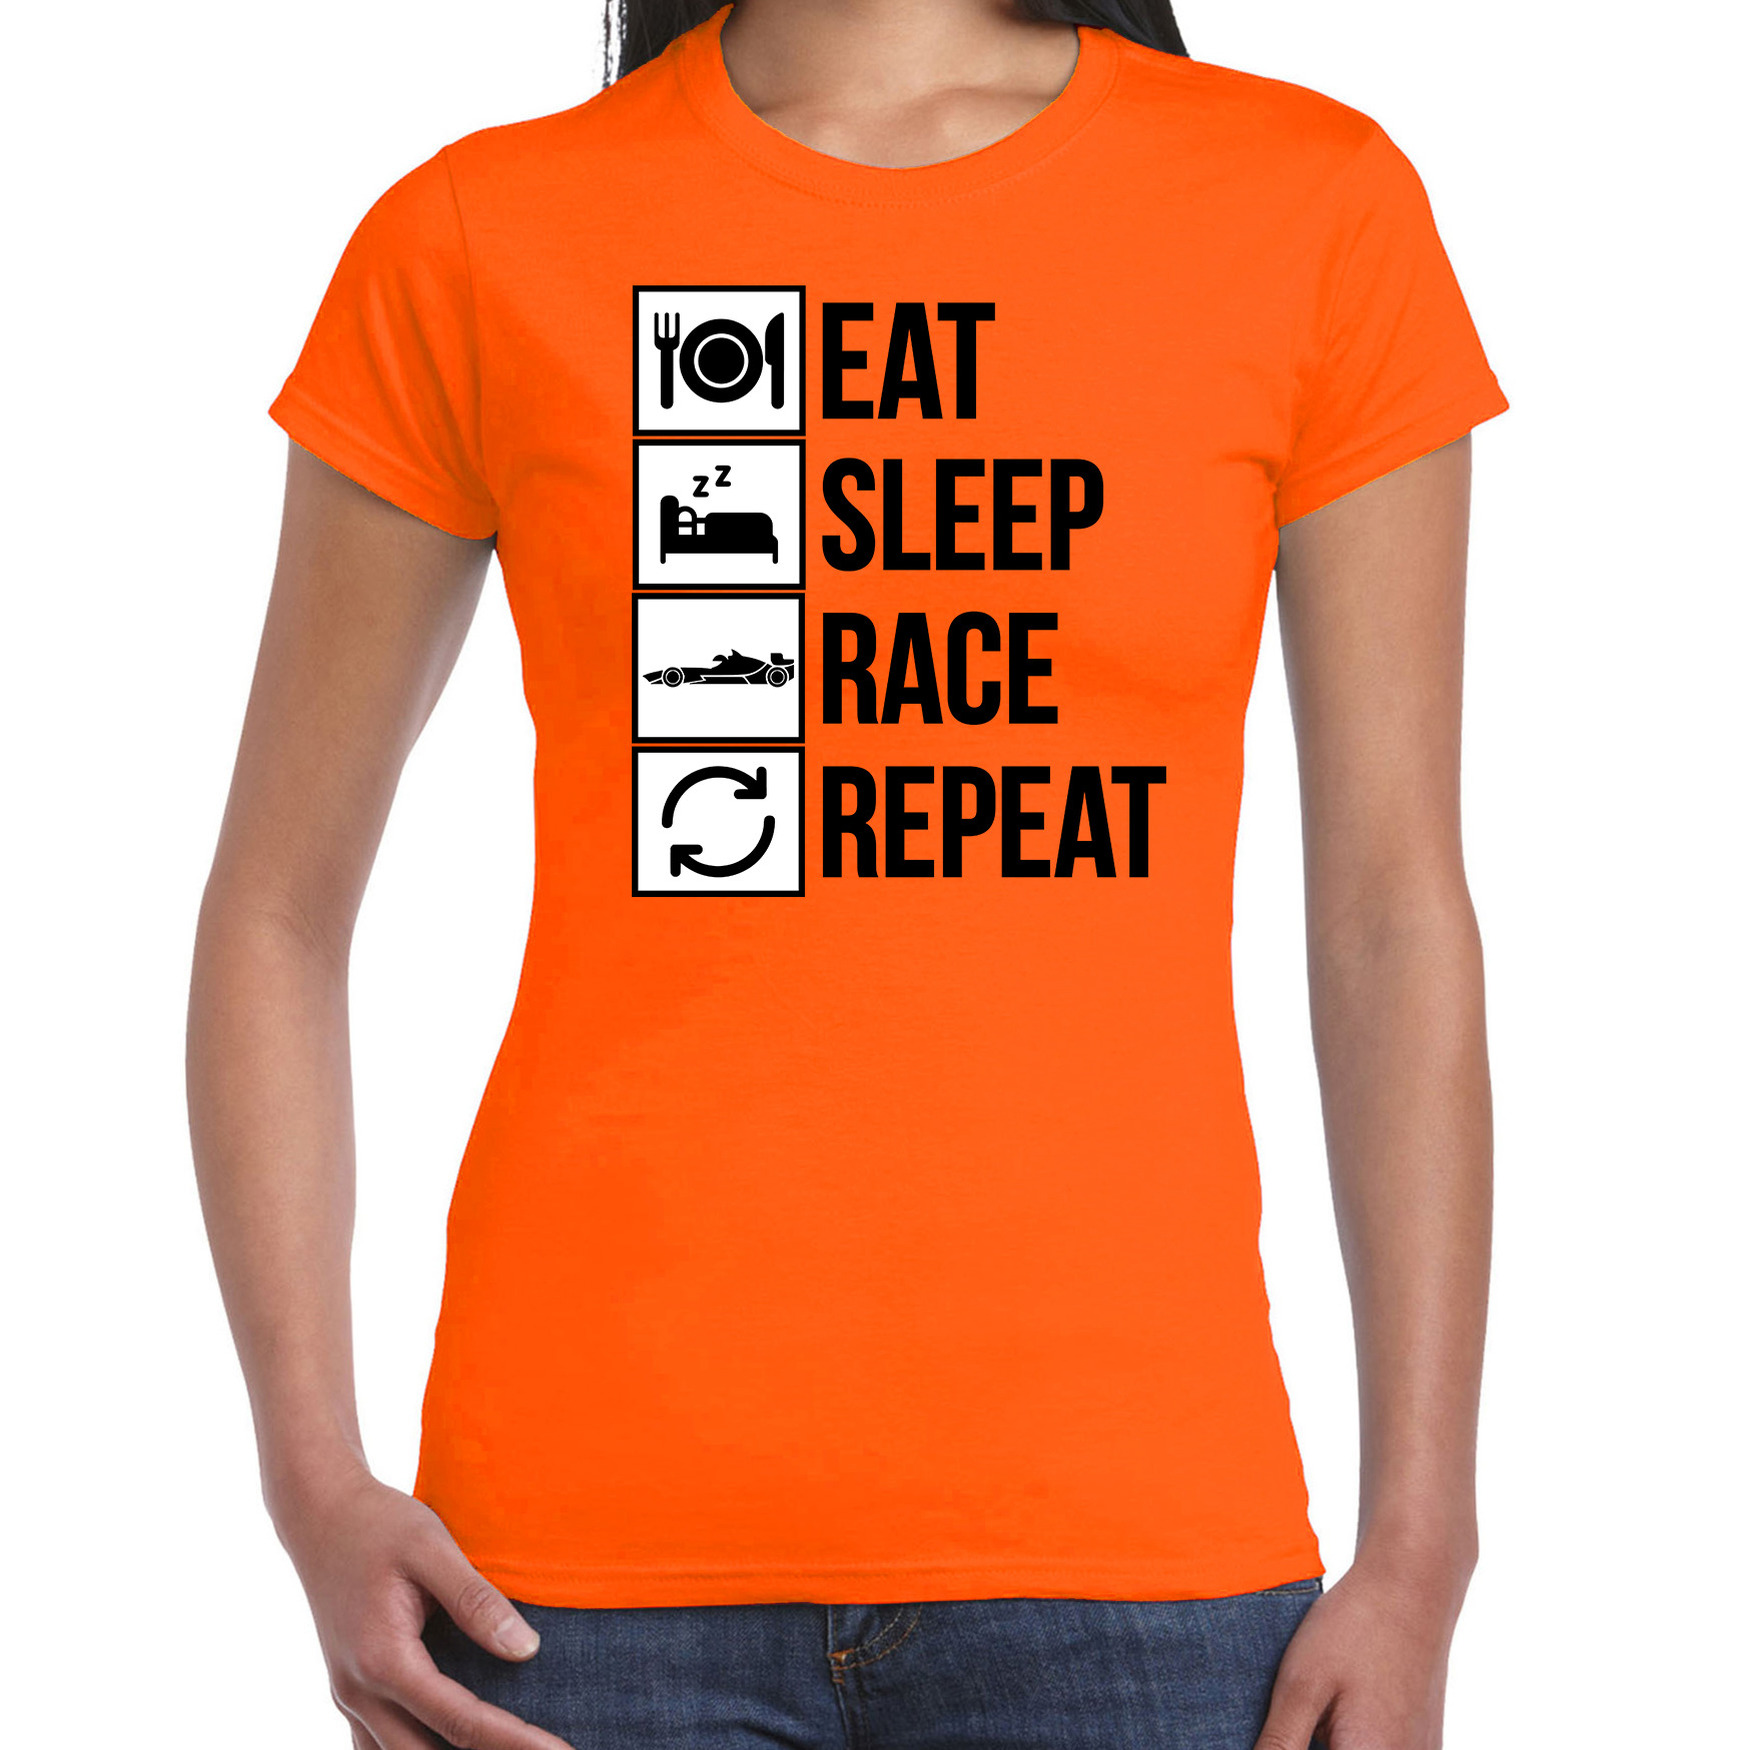 Eat sleep race repeat supporter-race fan t-shirt oranje voor dames